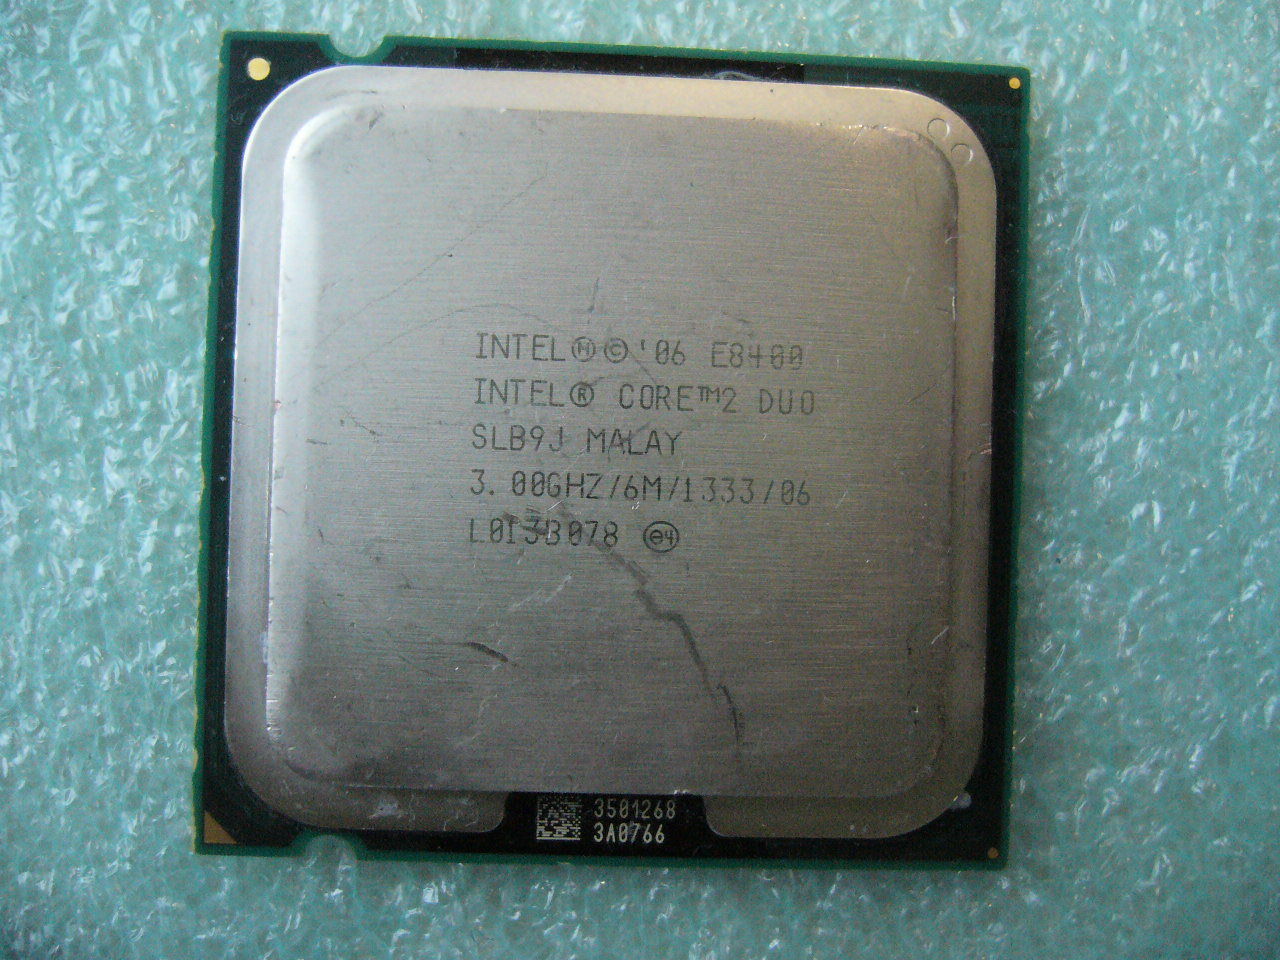 QTY 1x INTEL Core 2 Duo E8400 CPU 3.0GHz 6MB/1333Mhz LGA775 SLB9J SLAPL - Click Image to Close